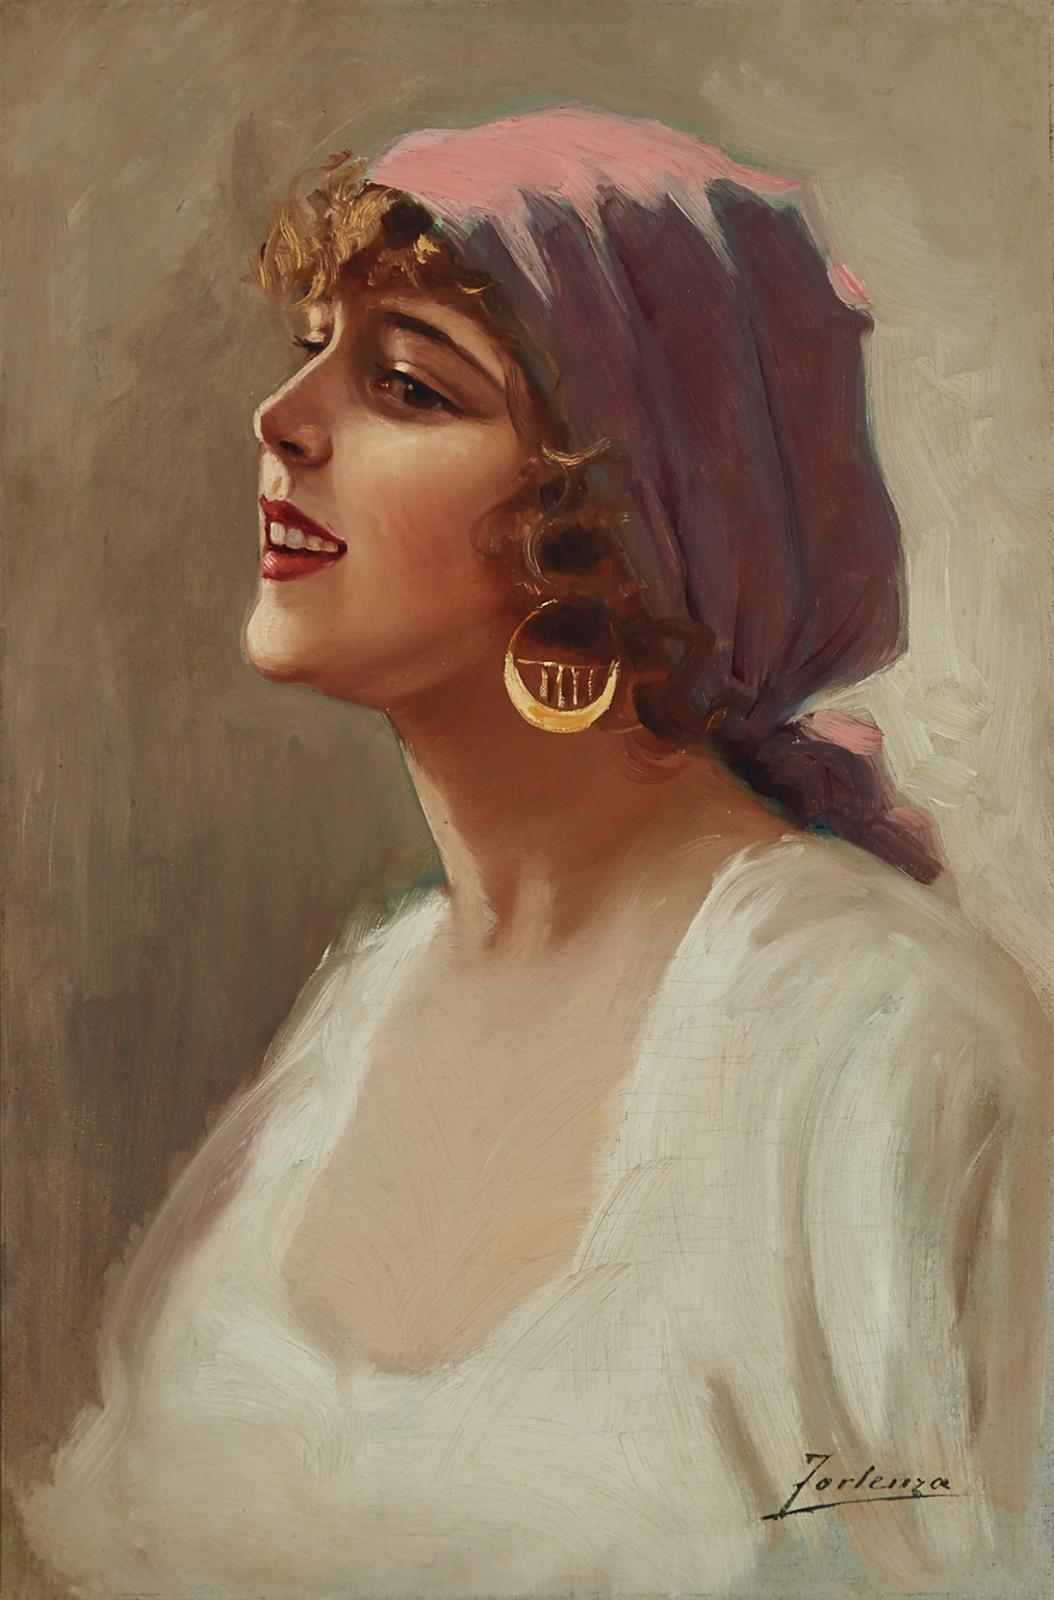 Eduardo Forlenza (1861-1934) - Girl With Headscarf